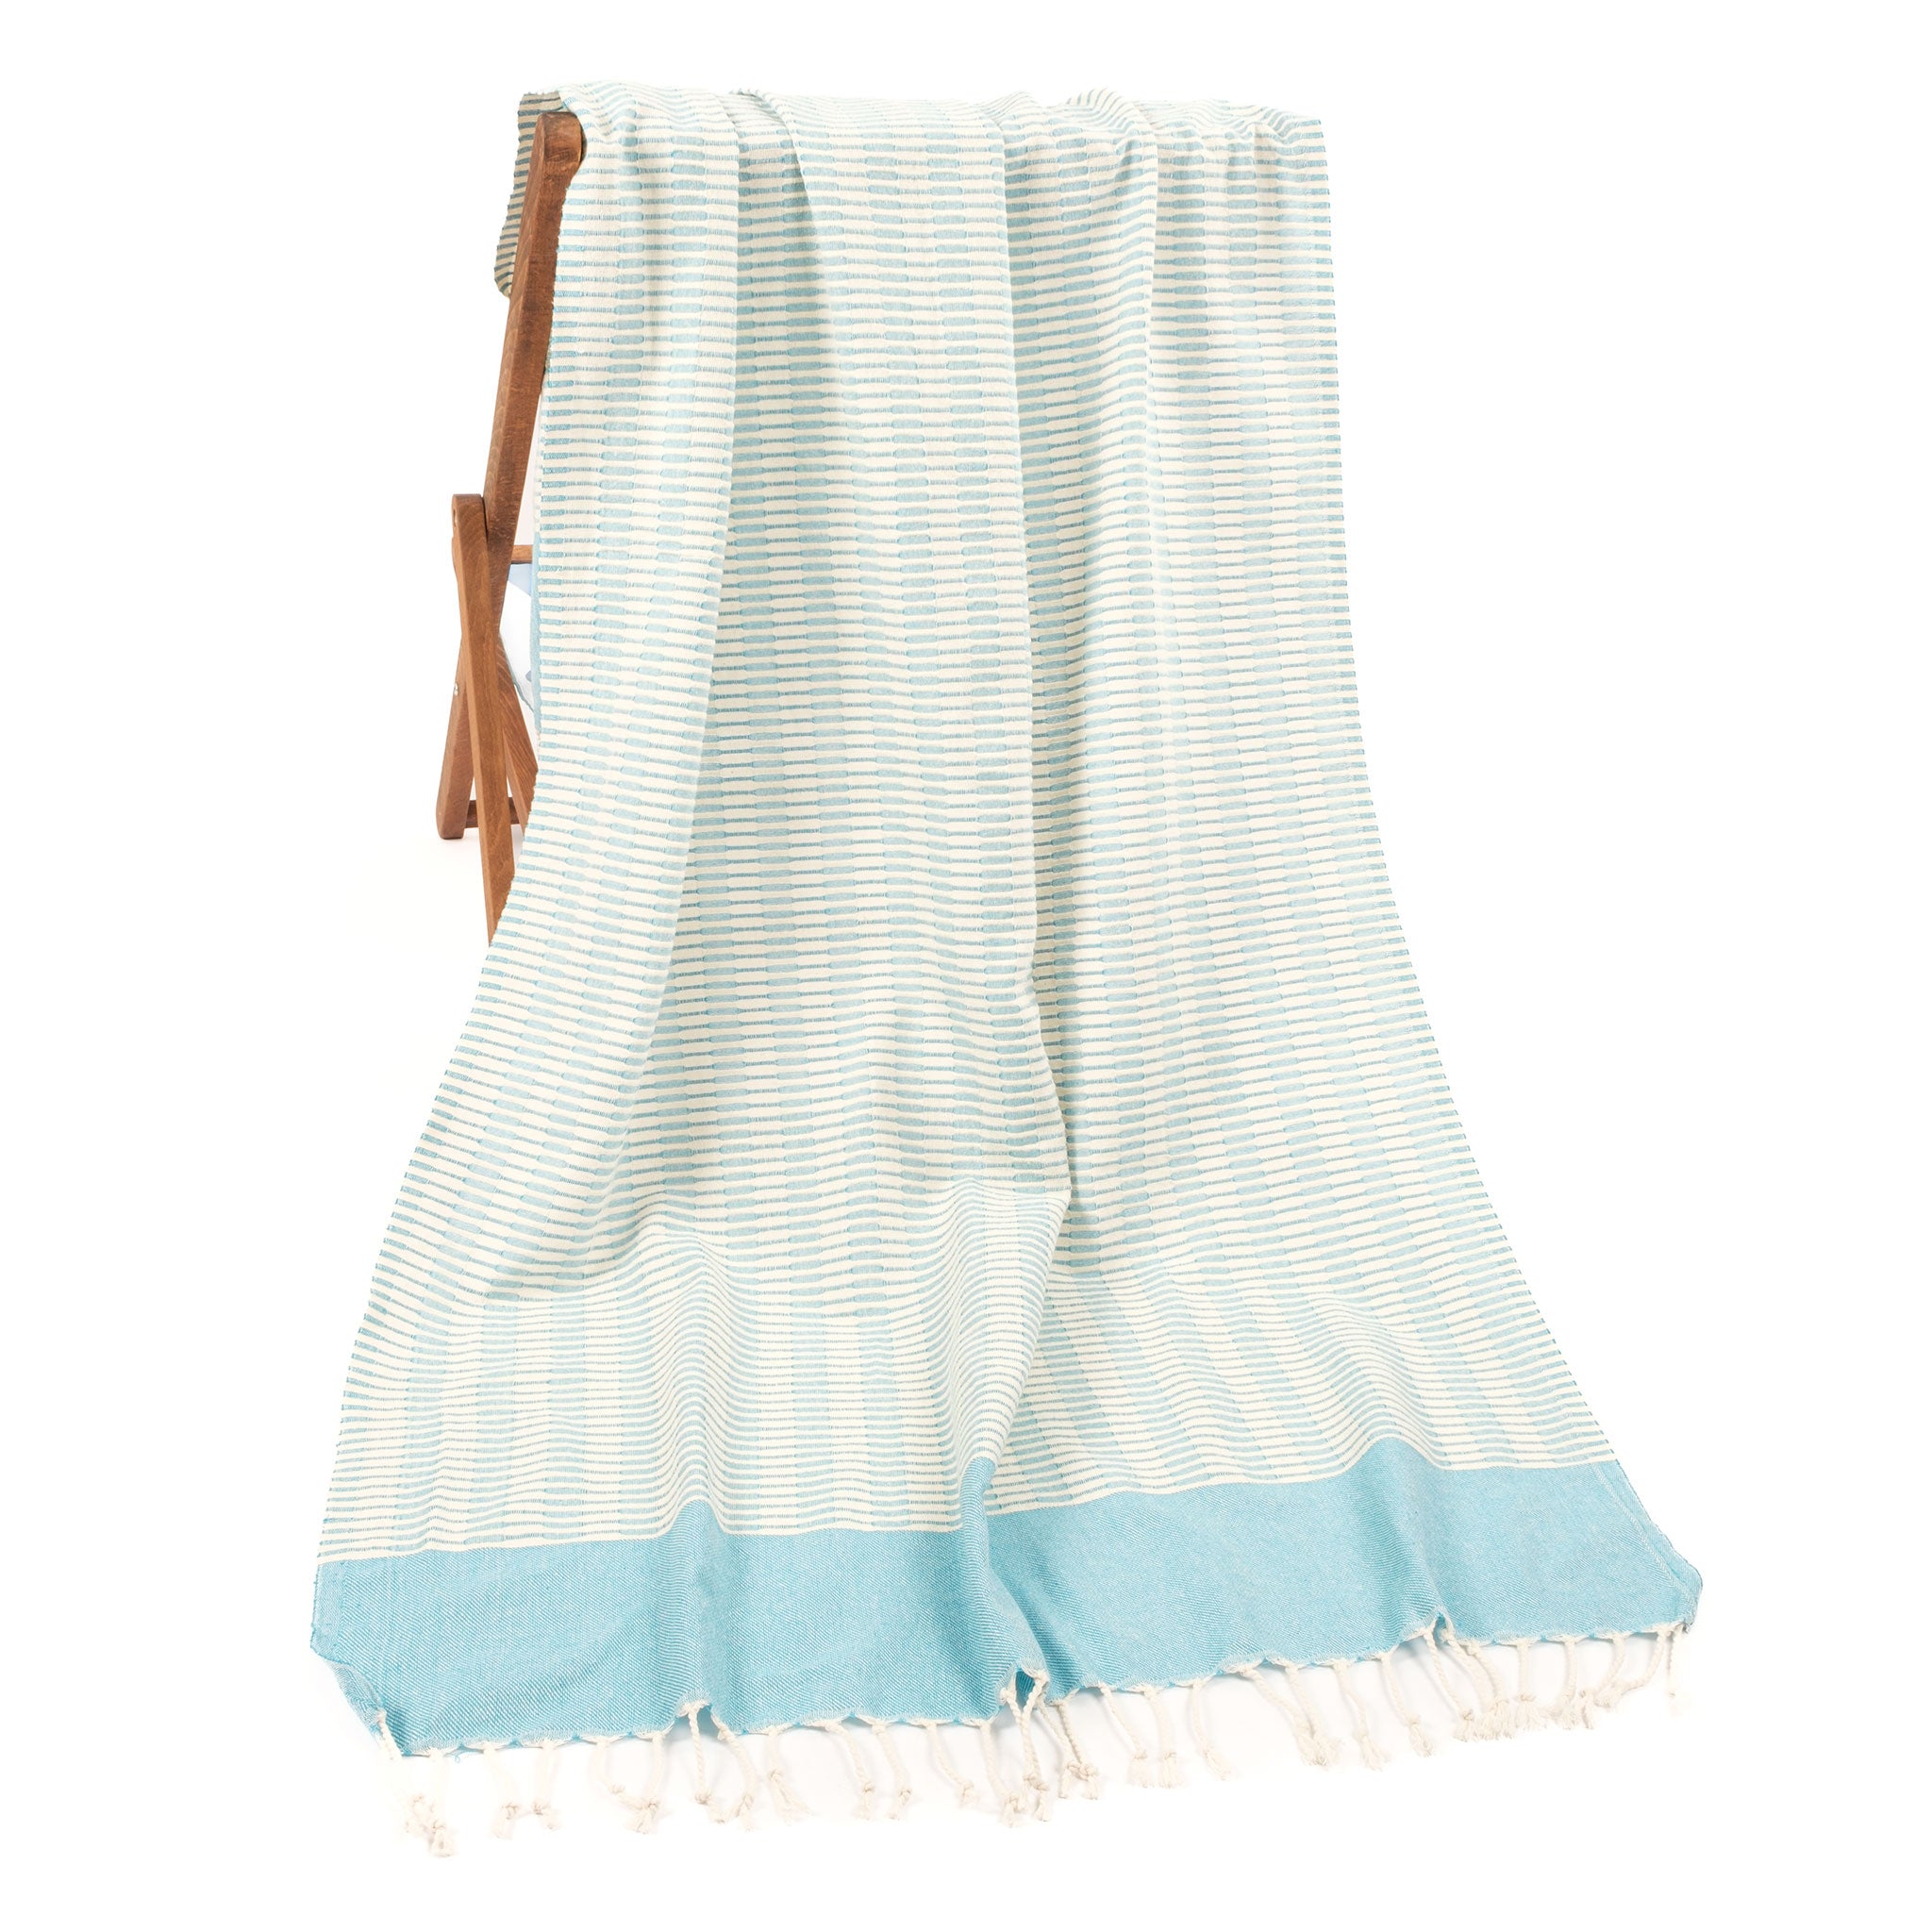 American Soft Linen - 100% Cotton Turkish Peshtemal Towels 40x70 Inches - Turquoise - 1